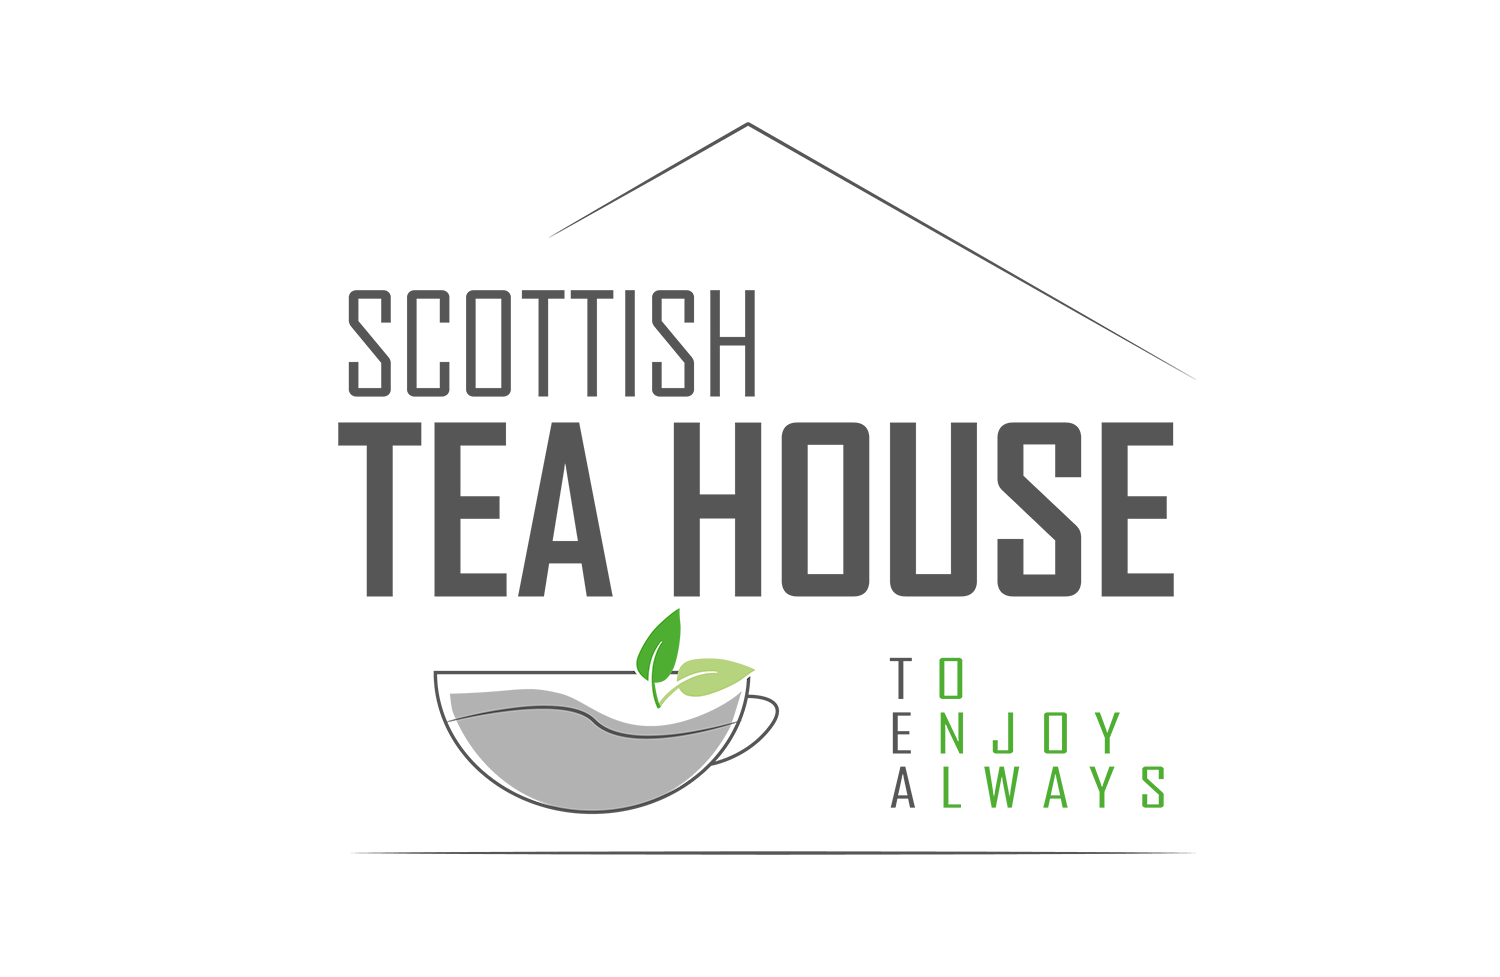 The Scottish Tea House